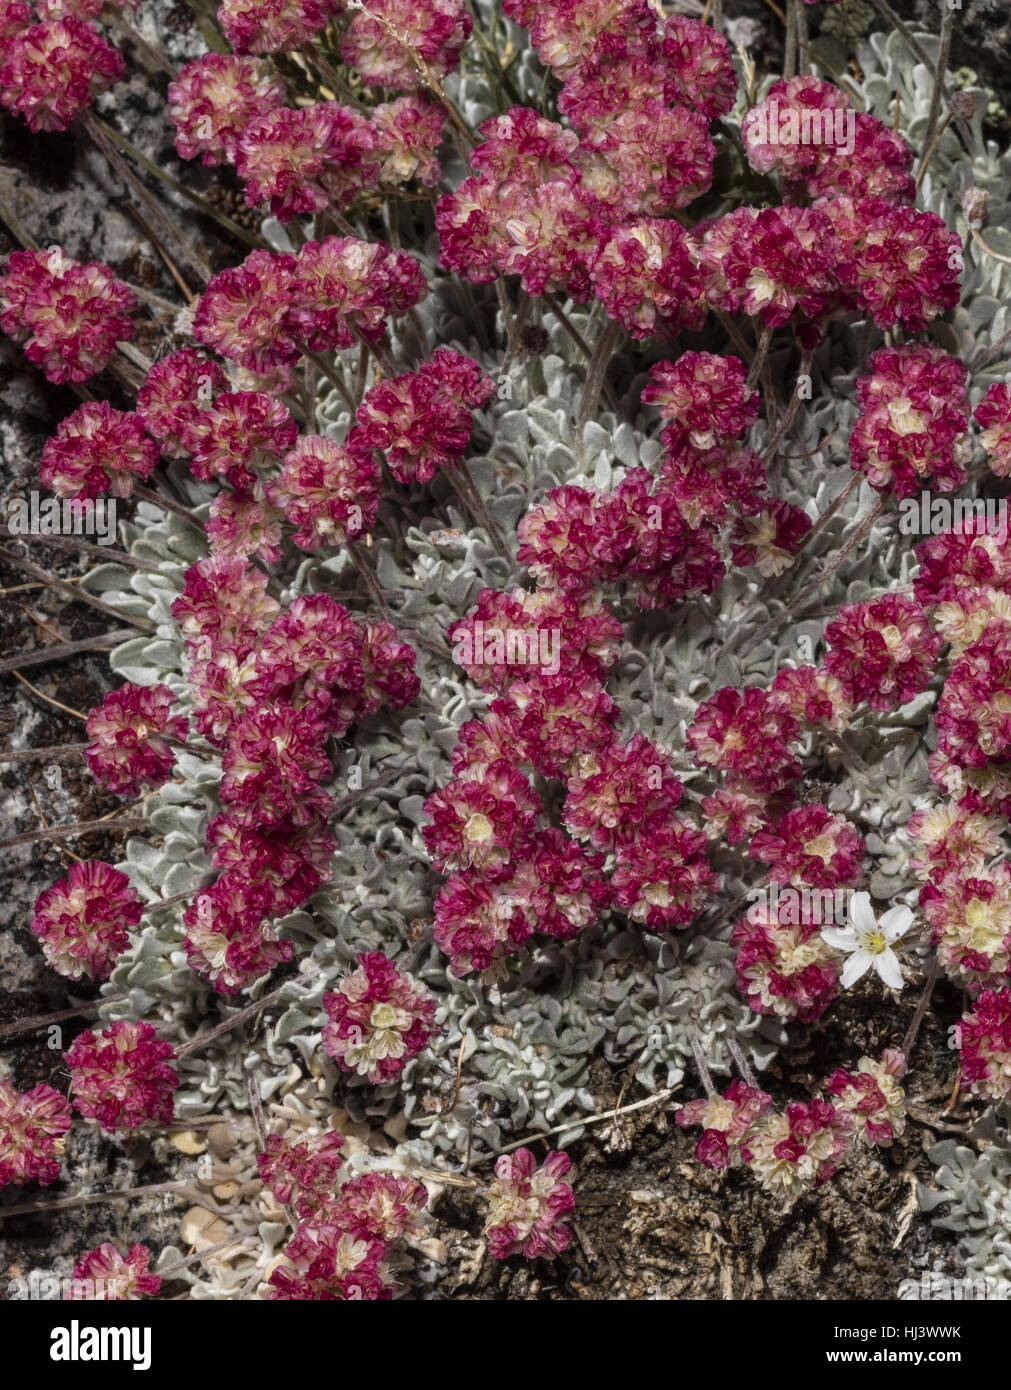 Bella densi ciuffi di alta altitudine cuscino di grano saraceno, ovalifolium Eriogonum var. nivale, Yosemite, Sierra Nevada. Foto Stock